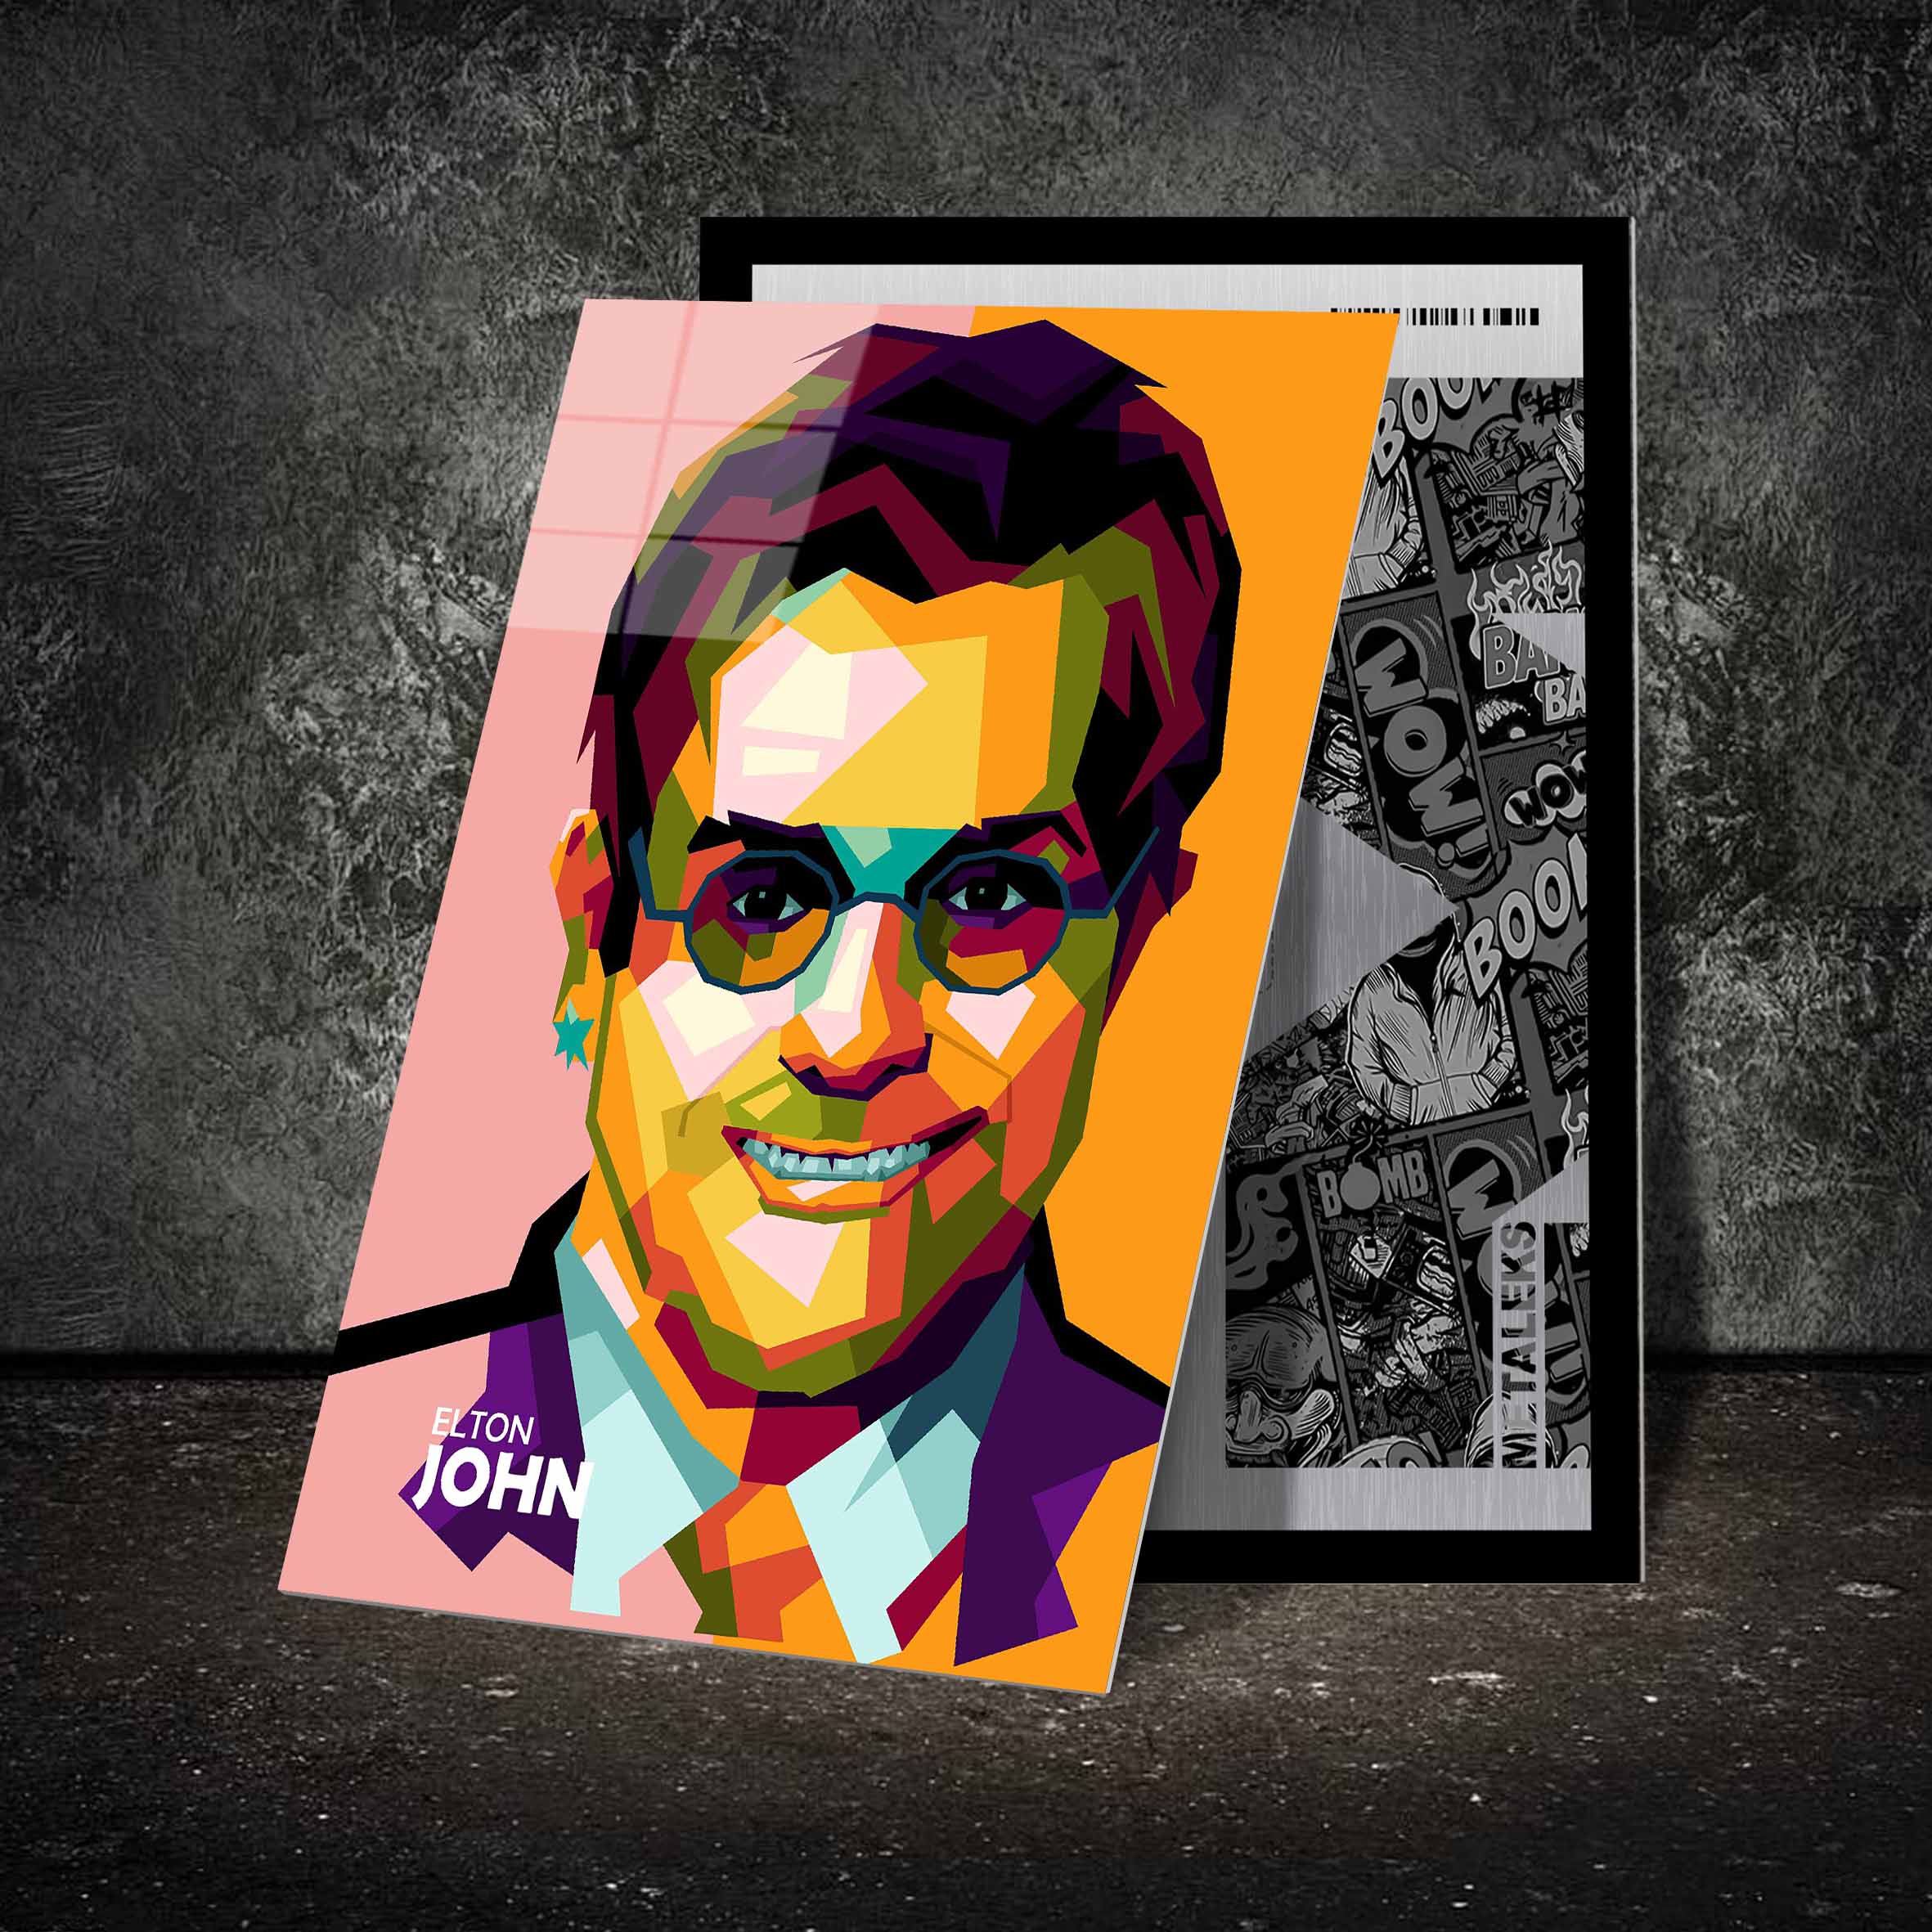 Elton John in fantastic pop art-designed by @Amirudin kosong enam